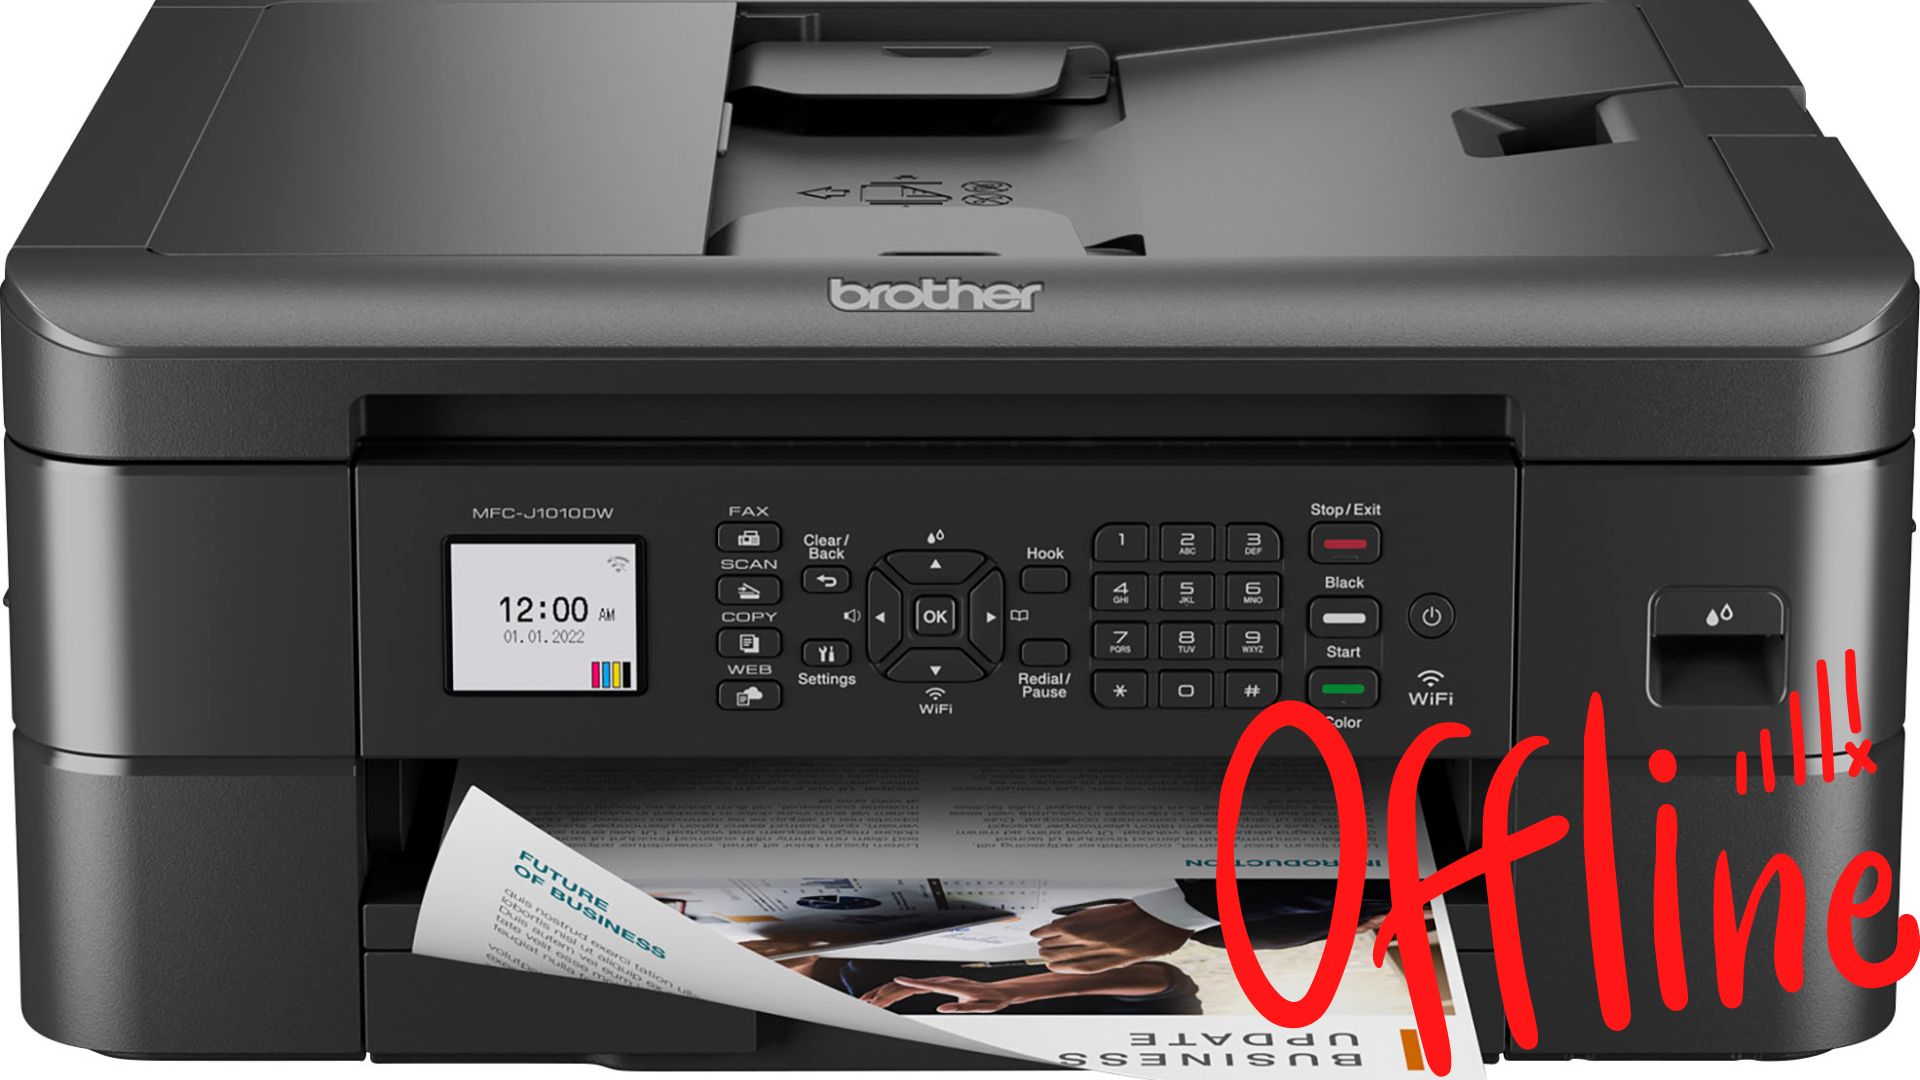 How Do I Get My Brother Printer Back Online